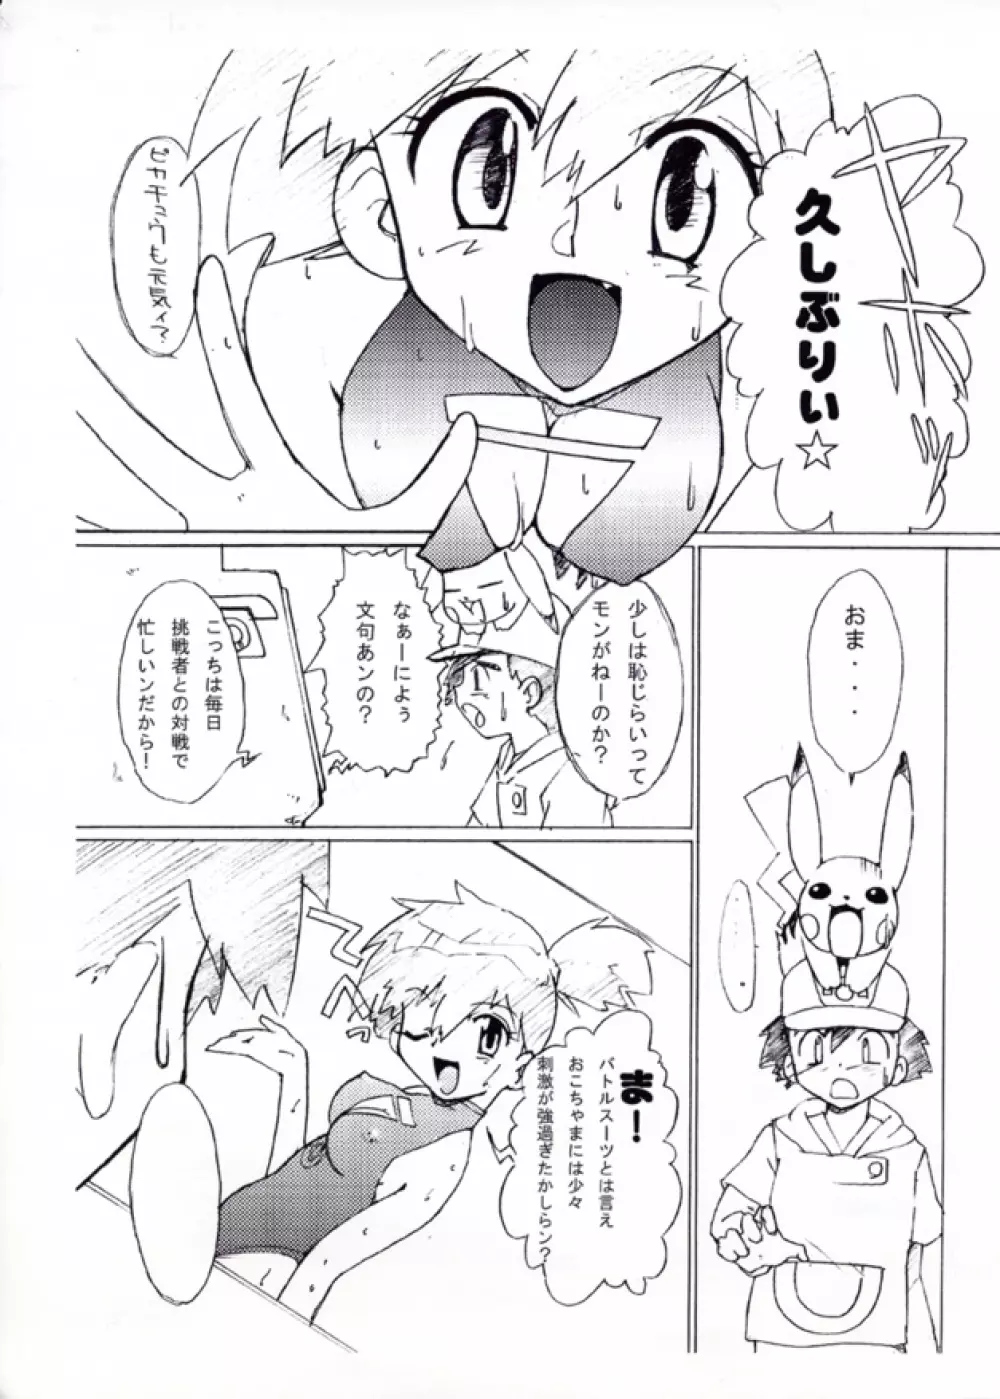 KASUMIX XPLOSION Kasumi Comic part5 - page24